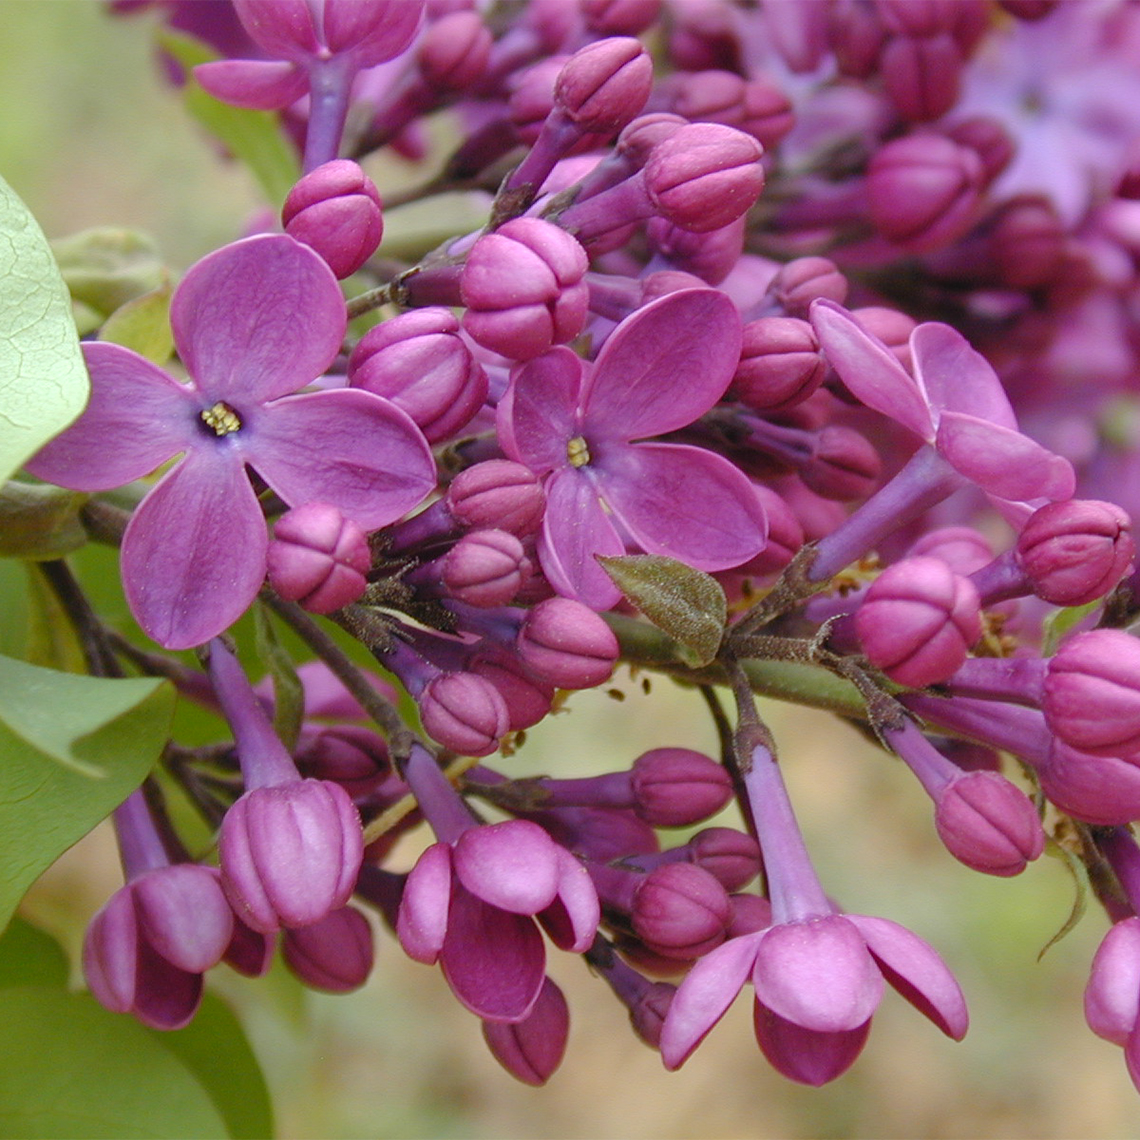 Closeup of the purple flowers